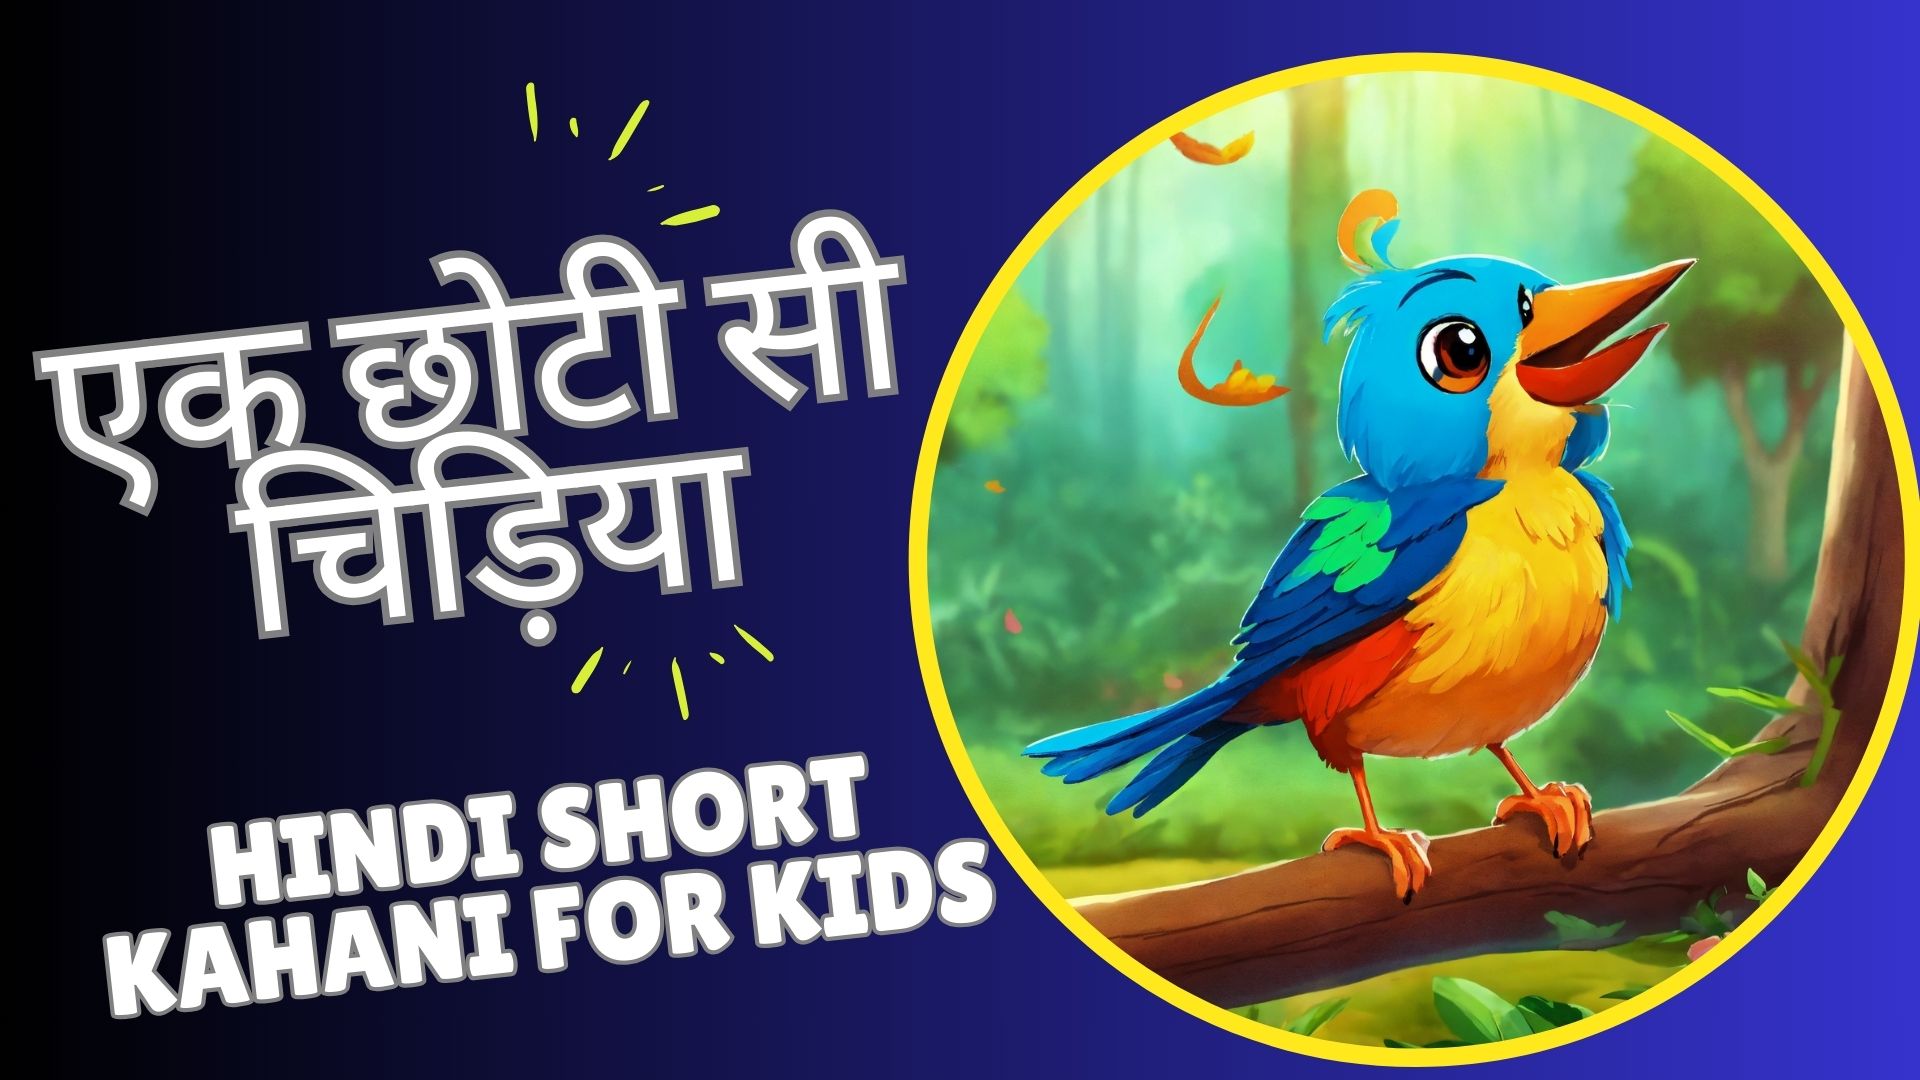 Hindi Short Kahani For Kids